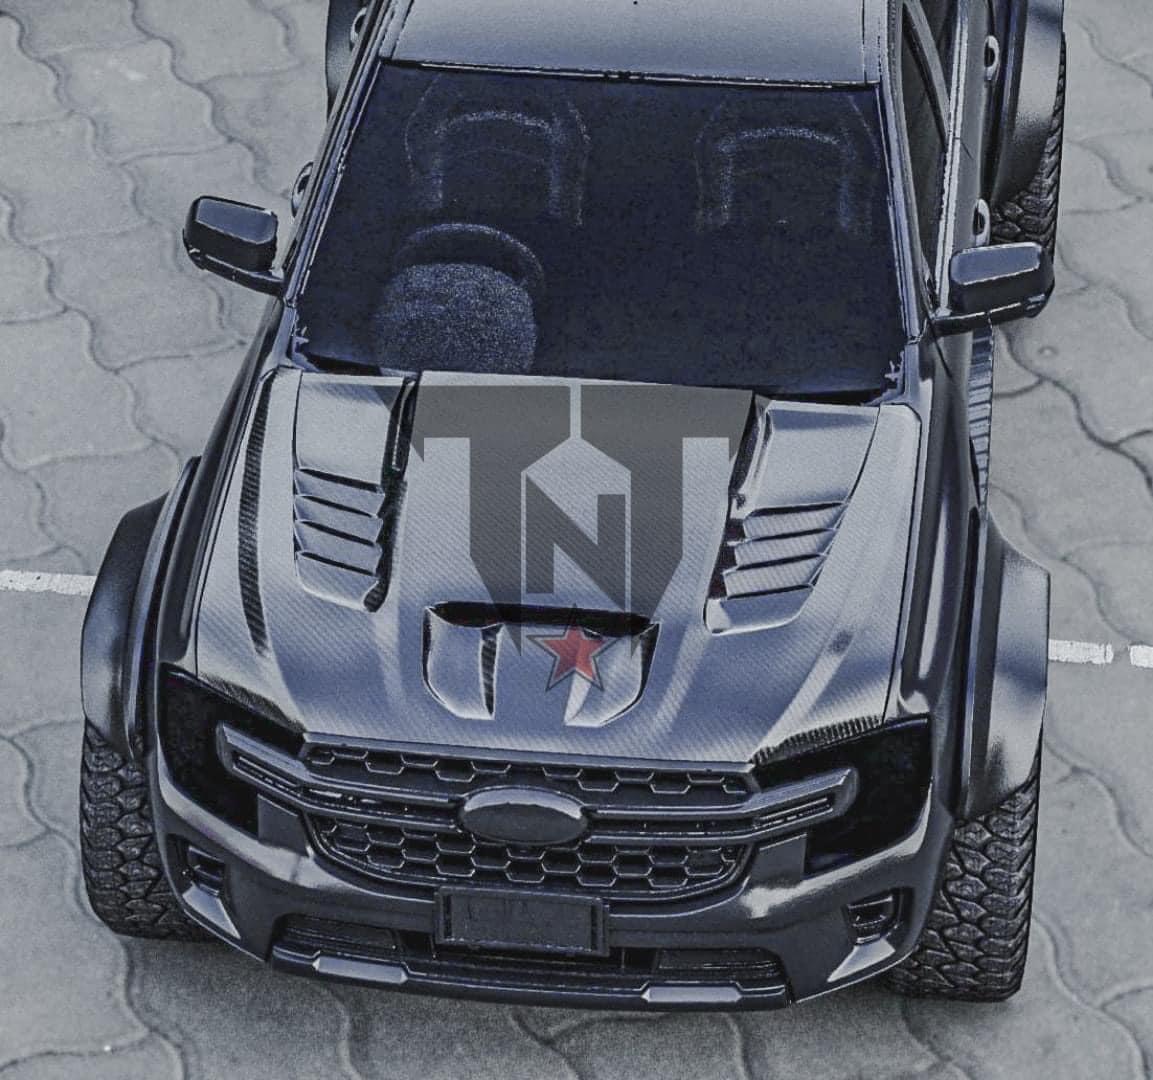 Bộ Bodykit Darknight cho Ford Ranger Next-Gen và Raptor Next-Gen